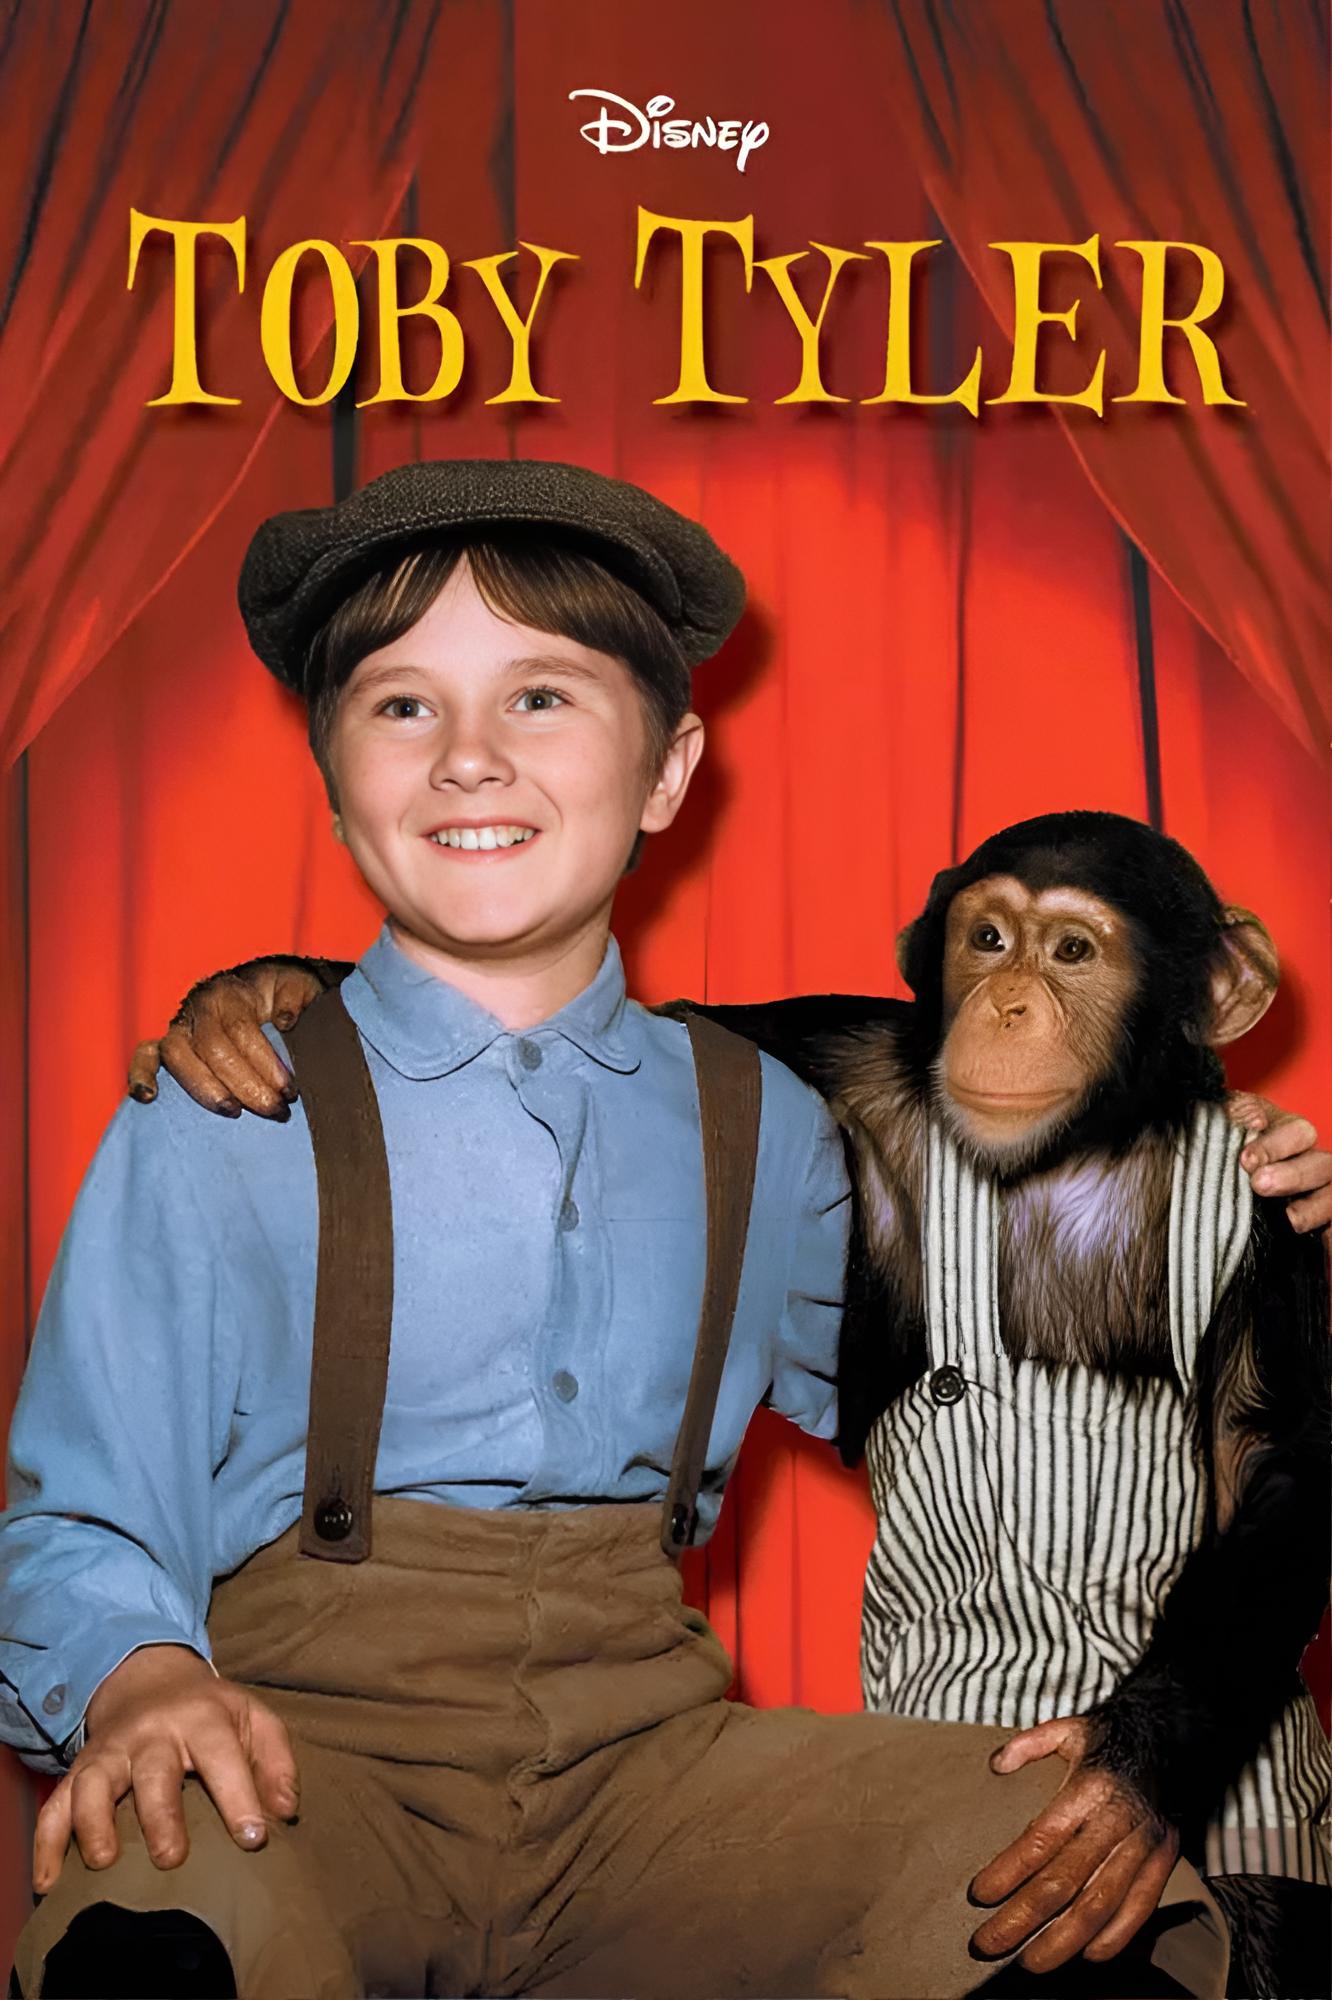 Toby Tyler (1960)